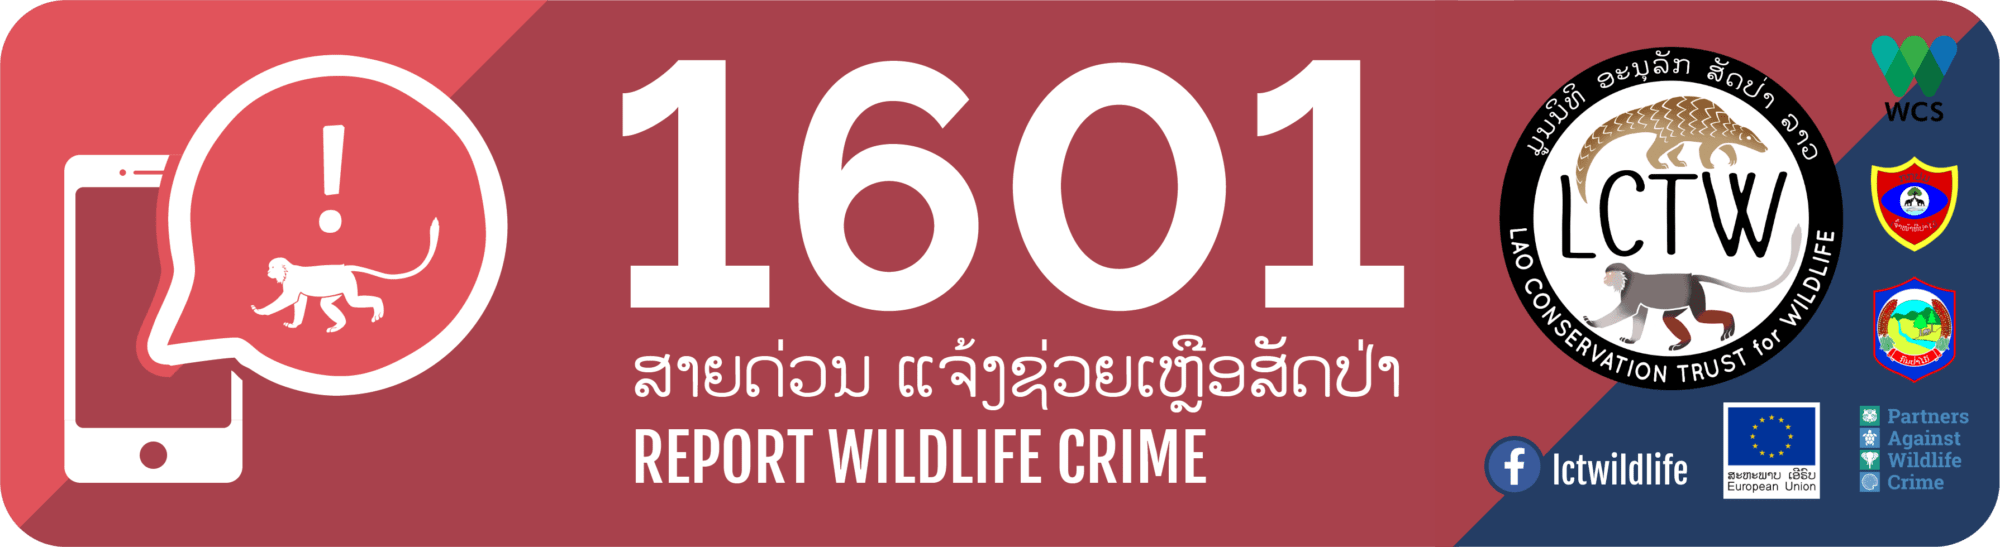 Report wildlife crime